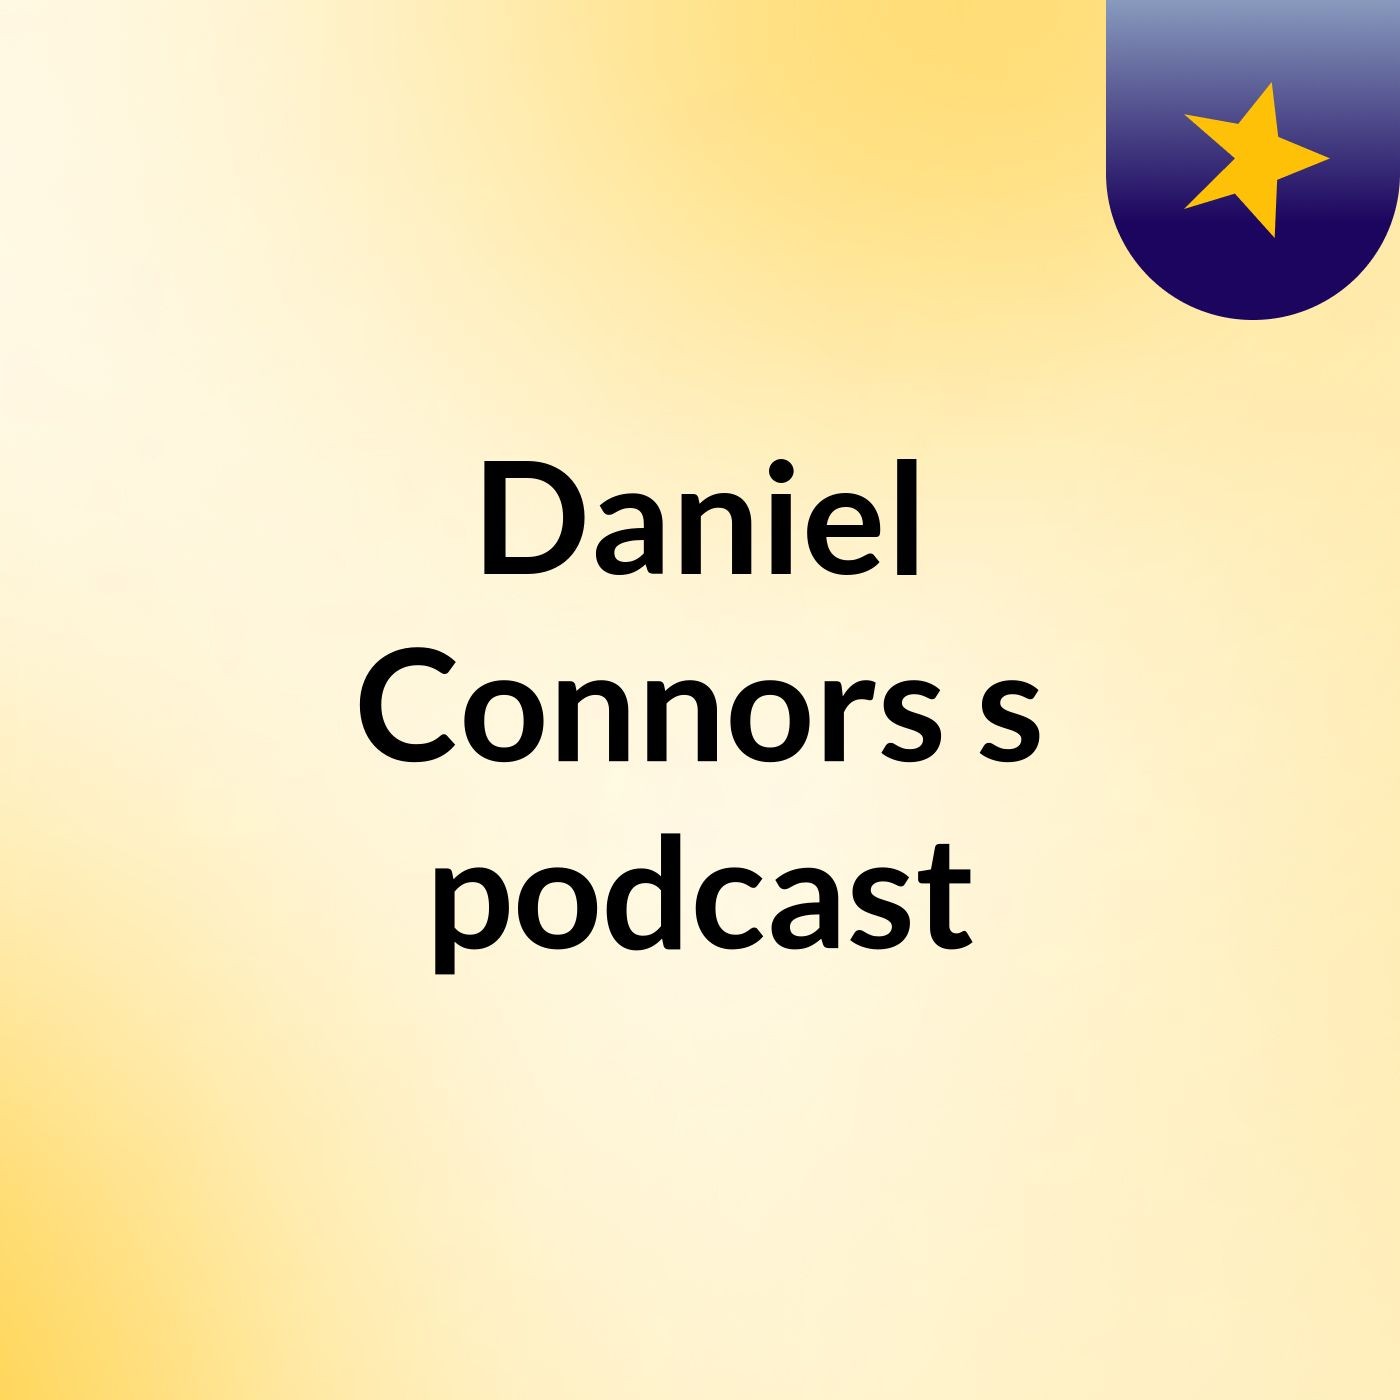 Daniel Connors's podcast